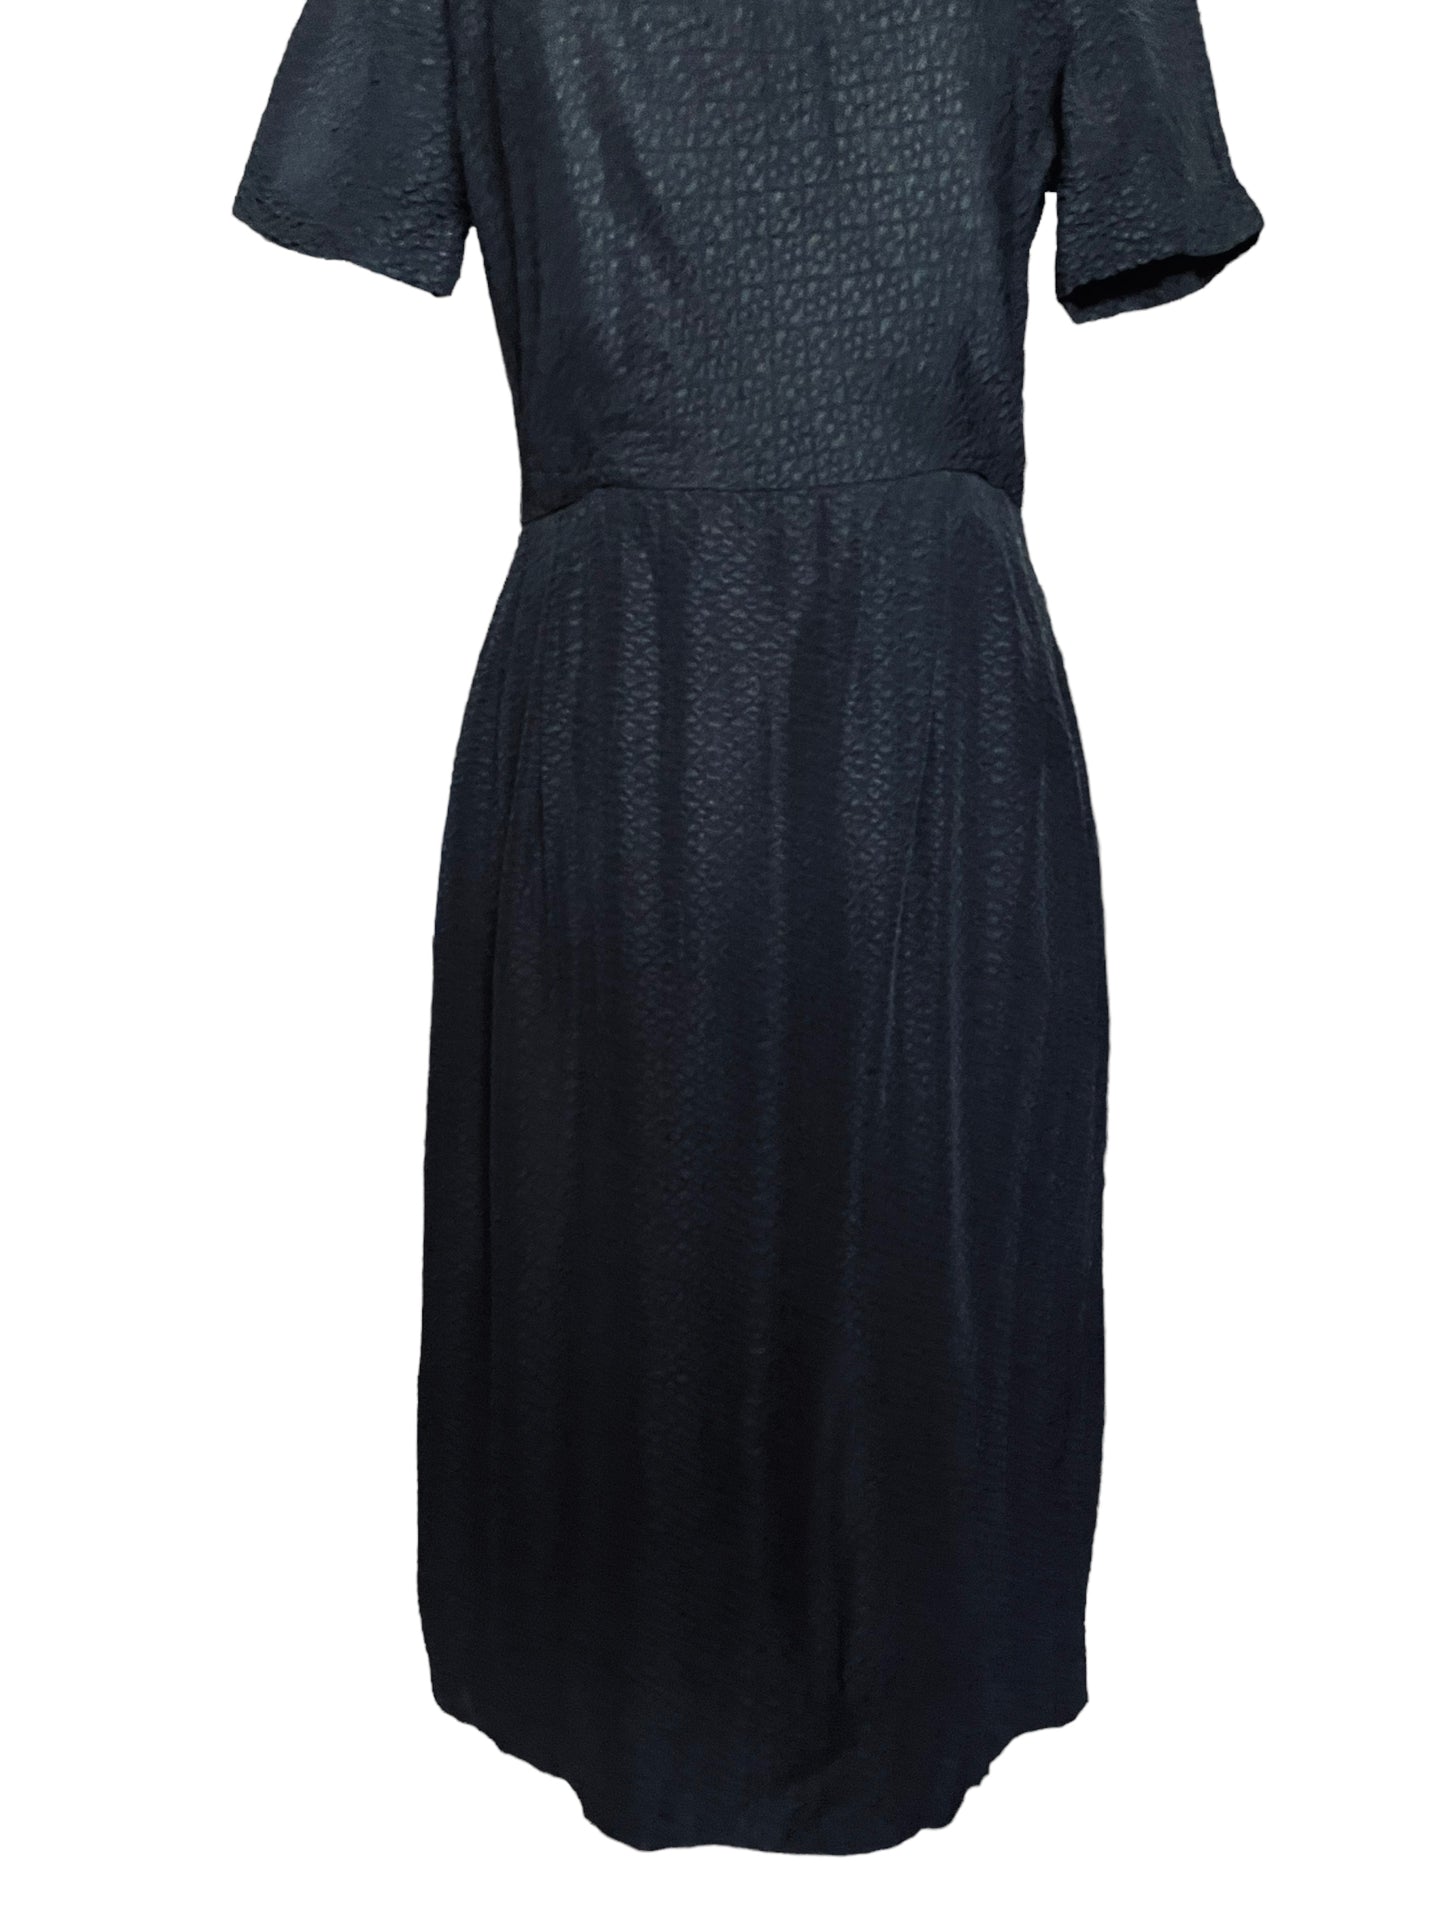 Front skirt view of Vintage 1950s Black Textured Dress by Parkshire |  Barn Owl Vintage | Seattle Vintage Dresses